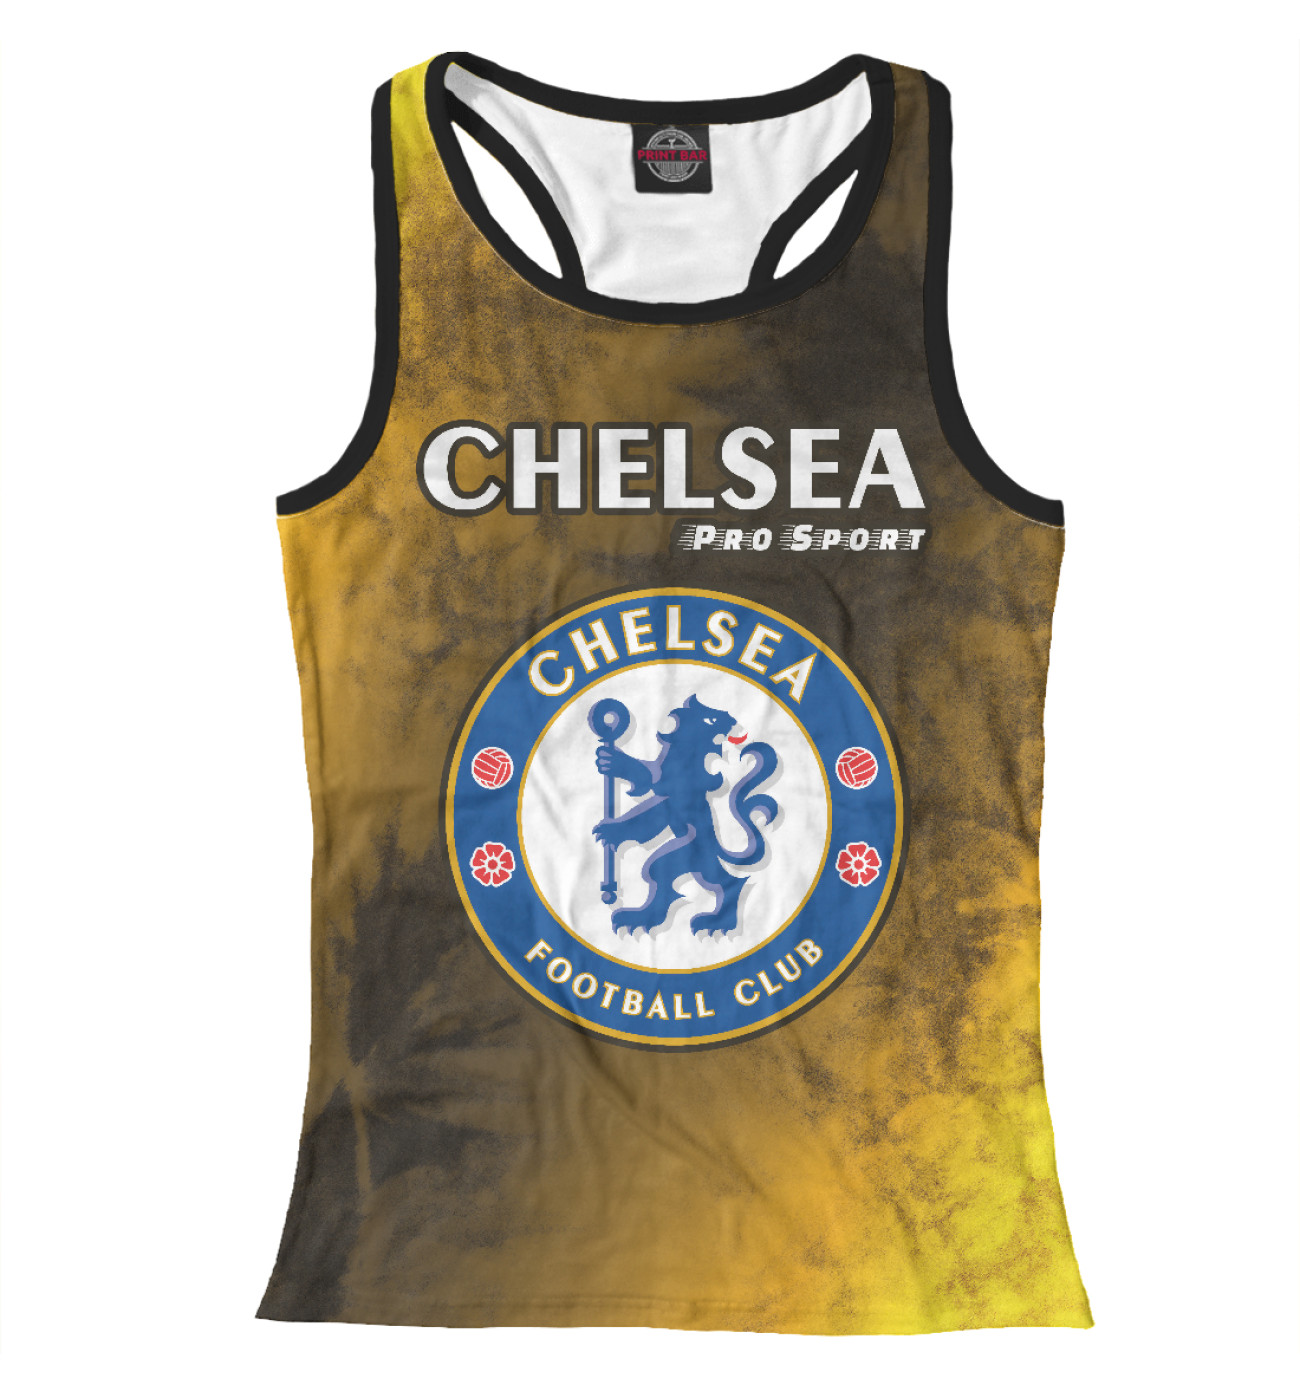 Женская Борцовка Chelsea | Pro Sport - Tie-Dye, артикул: CHL-235183-mayb-1